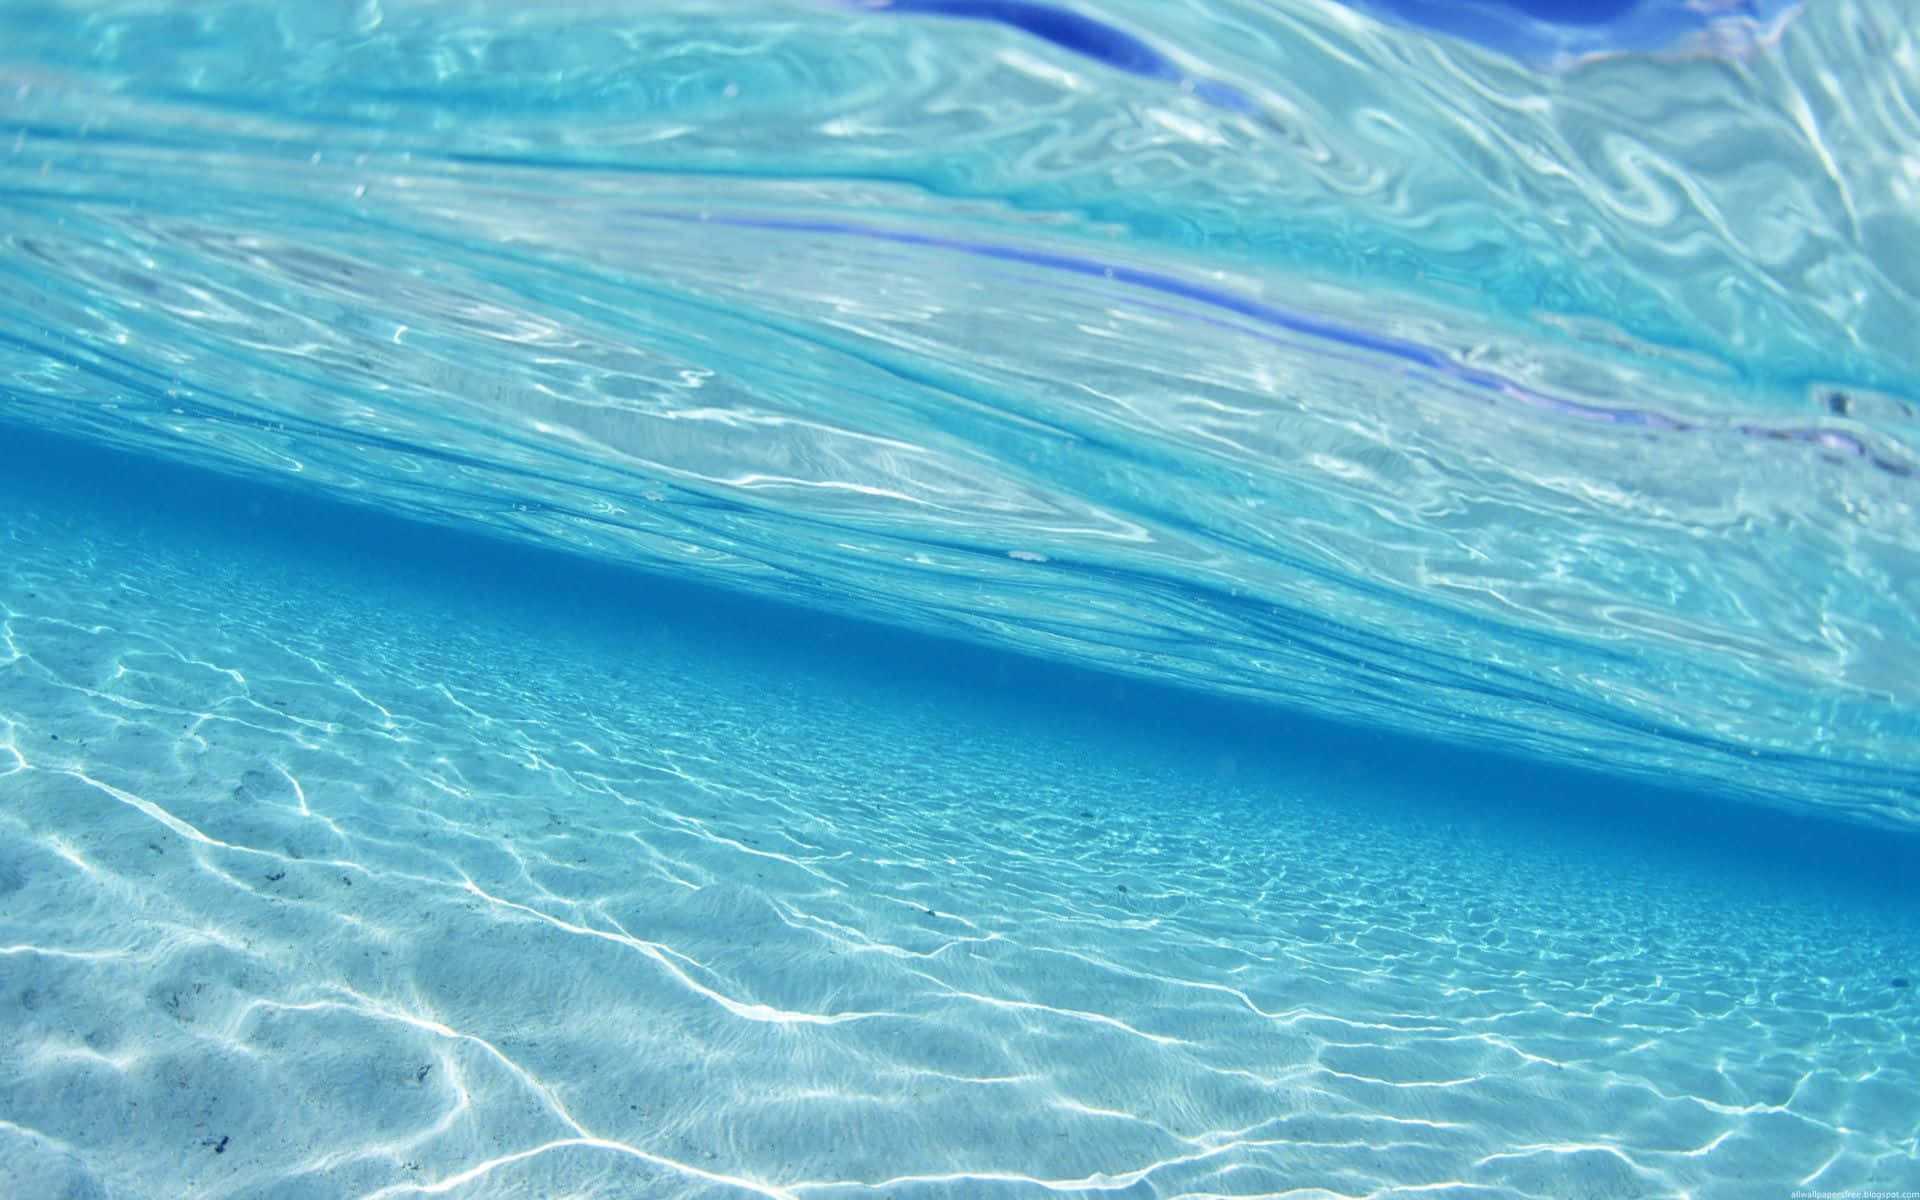 Beundrarskönheten I Det Azurblå Havsvattnet.